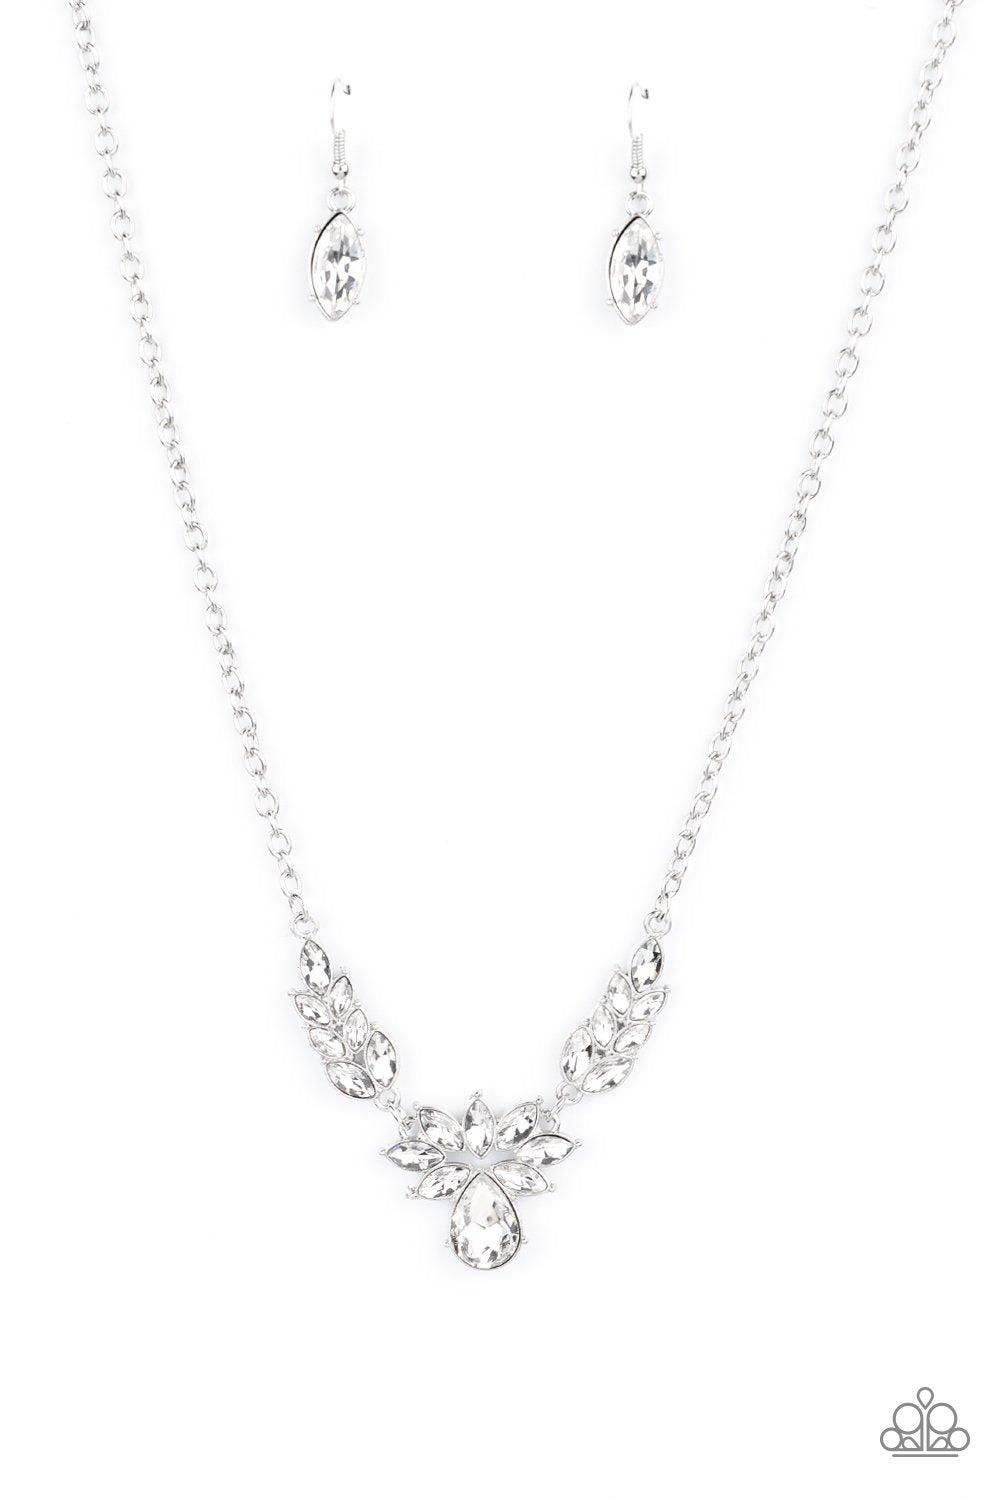 I Need Some HEIR White Rhinestone Necklace - Paparazzi Accessories-CarasShop.com - $5 Jewelry by Cara Jewels